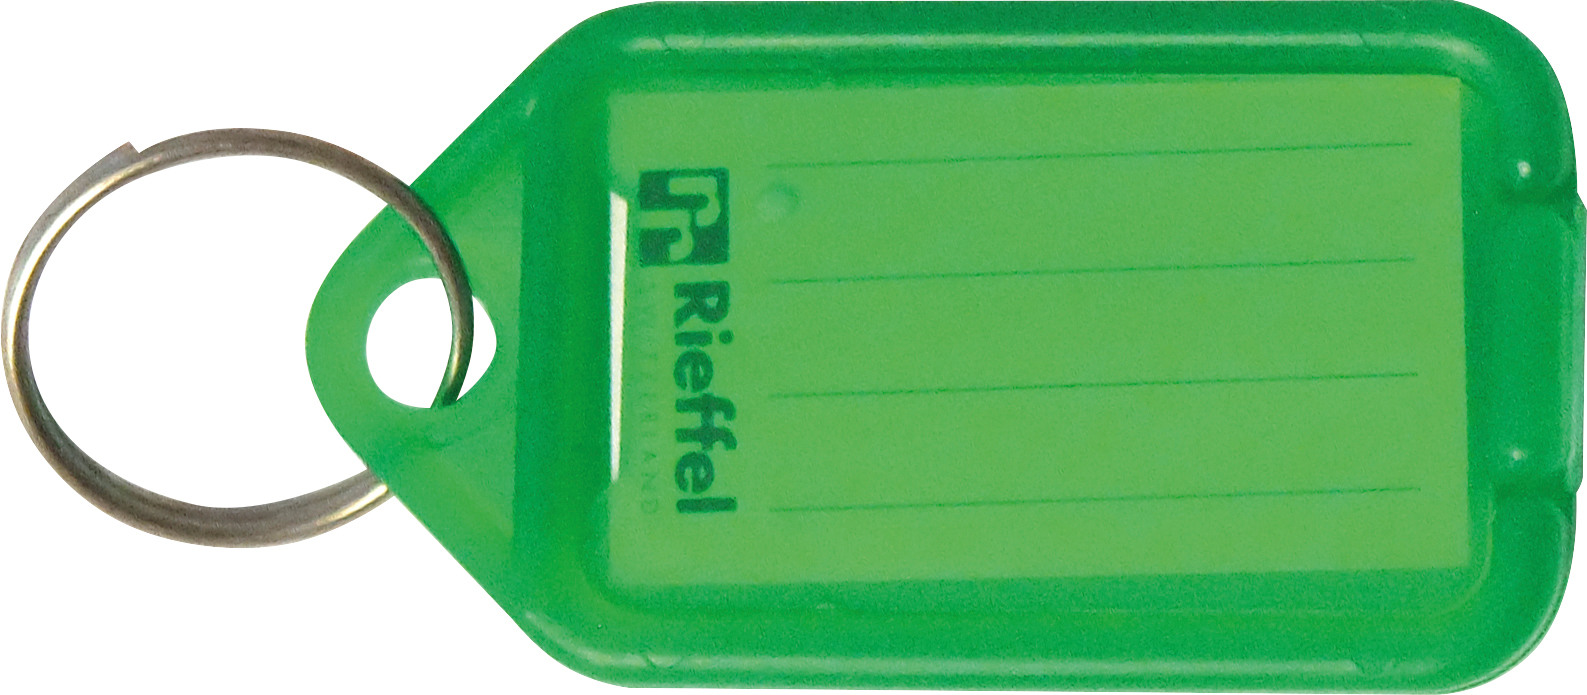 RIEFFEL SWITZERLAND Etiquettes clé 38x22mm KT 1000 SB/10 GRÜN vert 10 pcs.